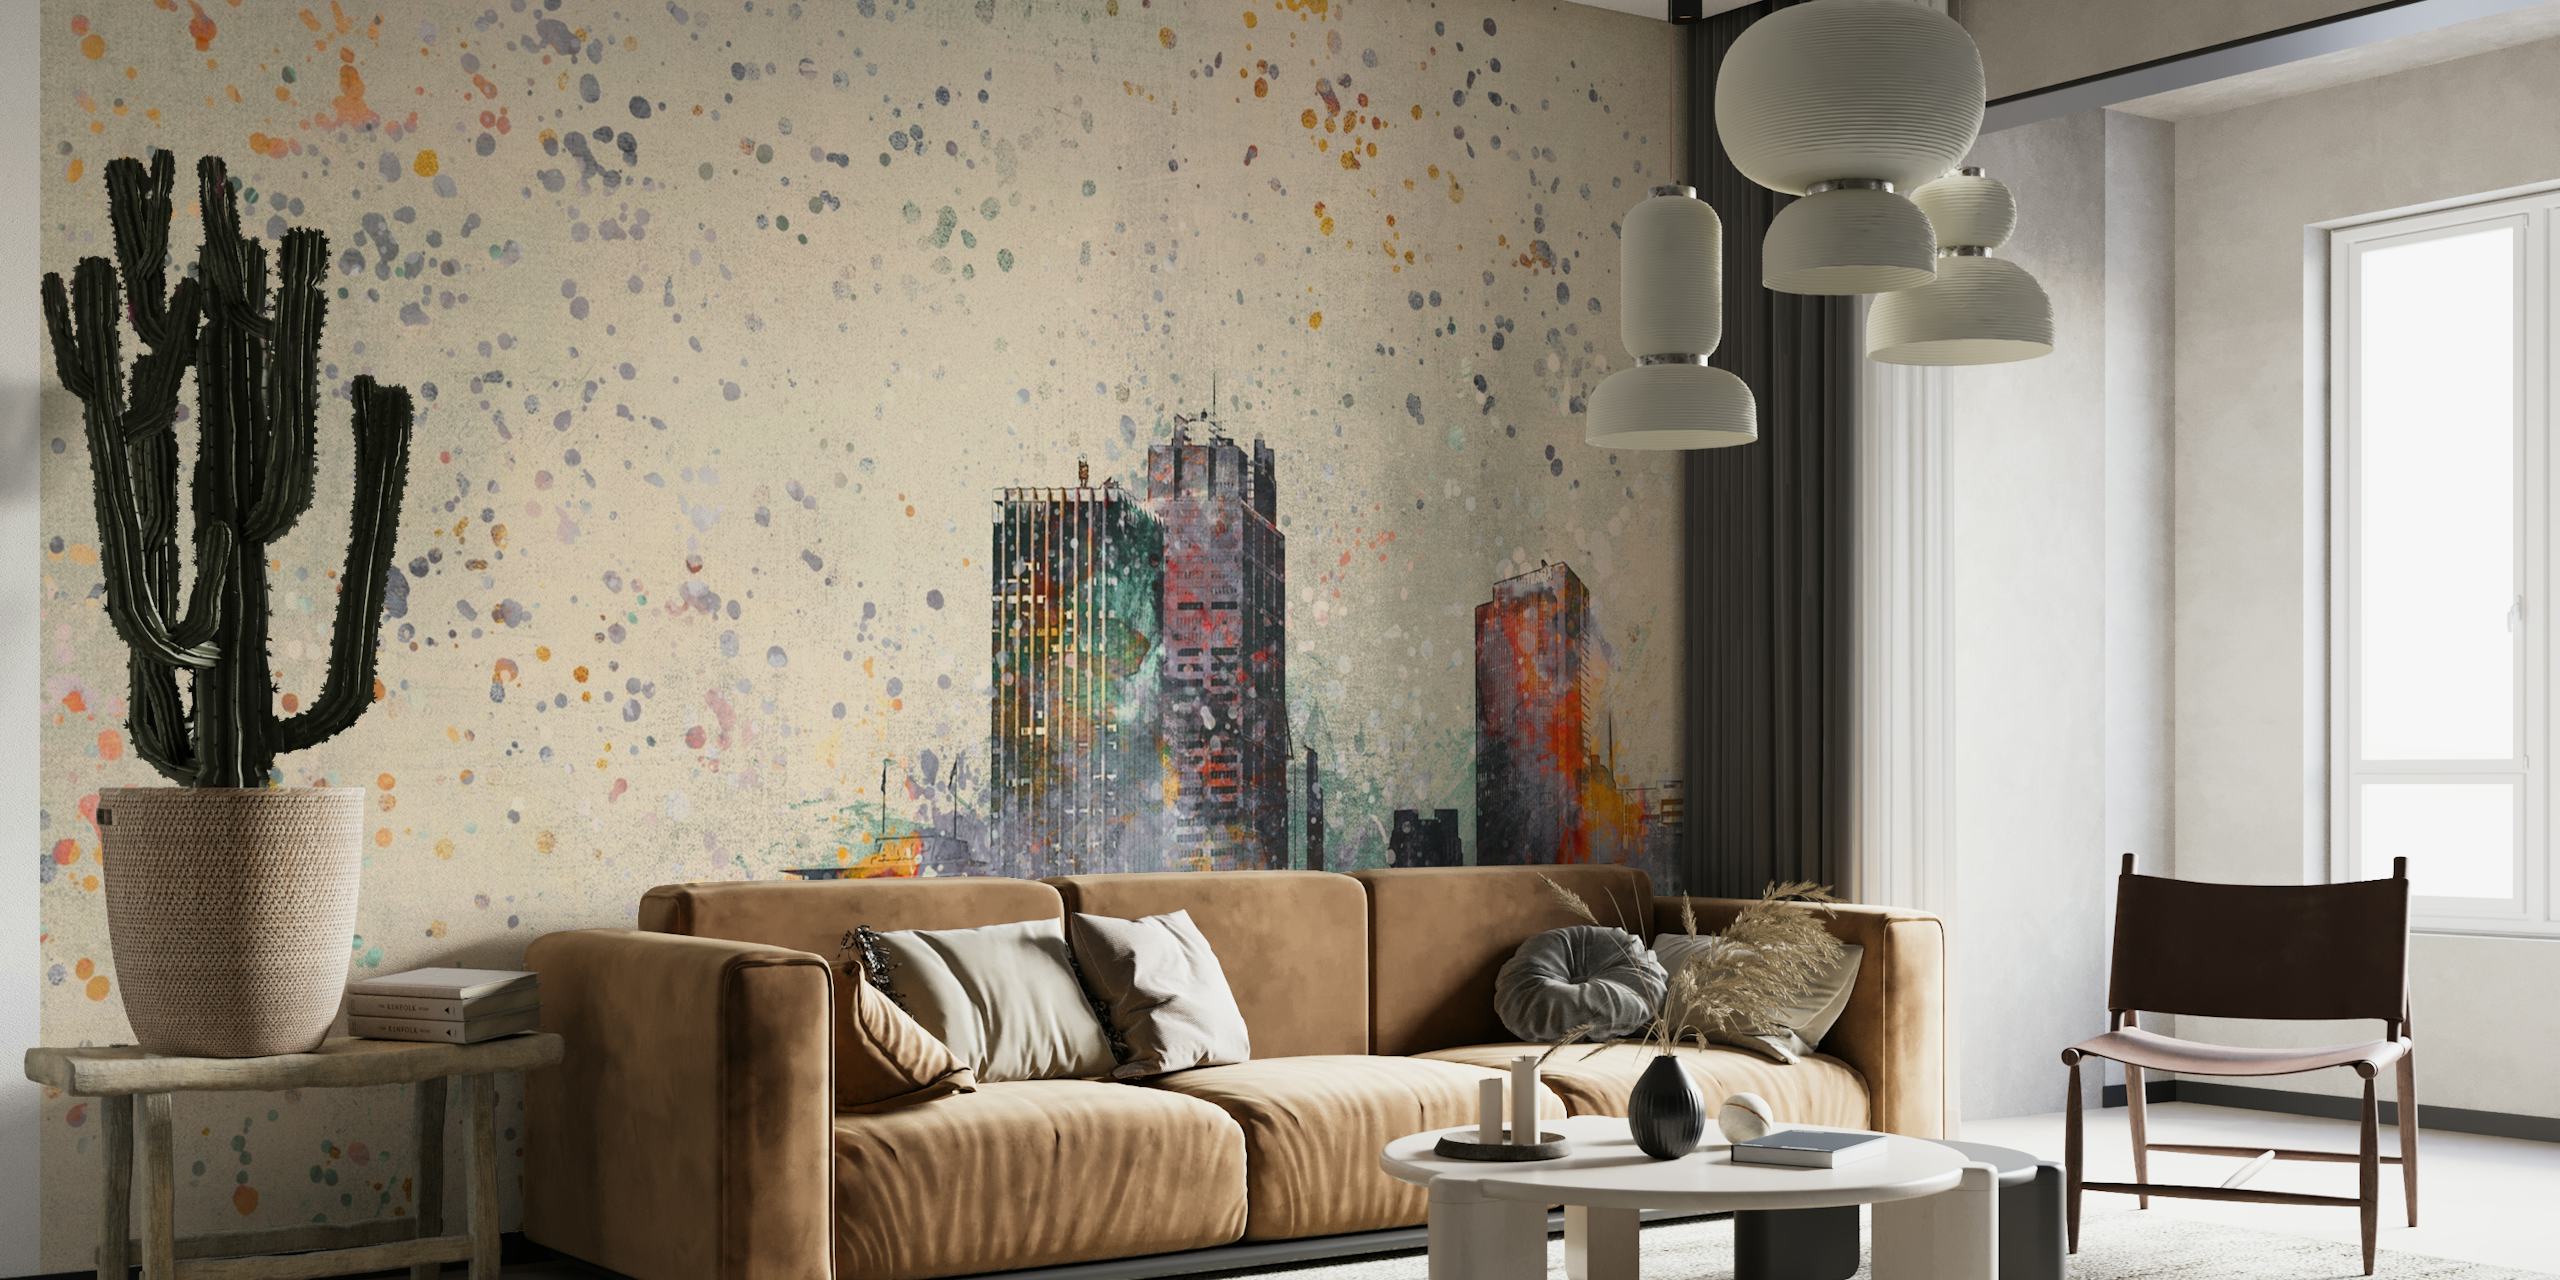 Mural de parede abstrato de paisagem urbana com cores vibrantes e efeito de tinta respingada